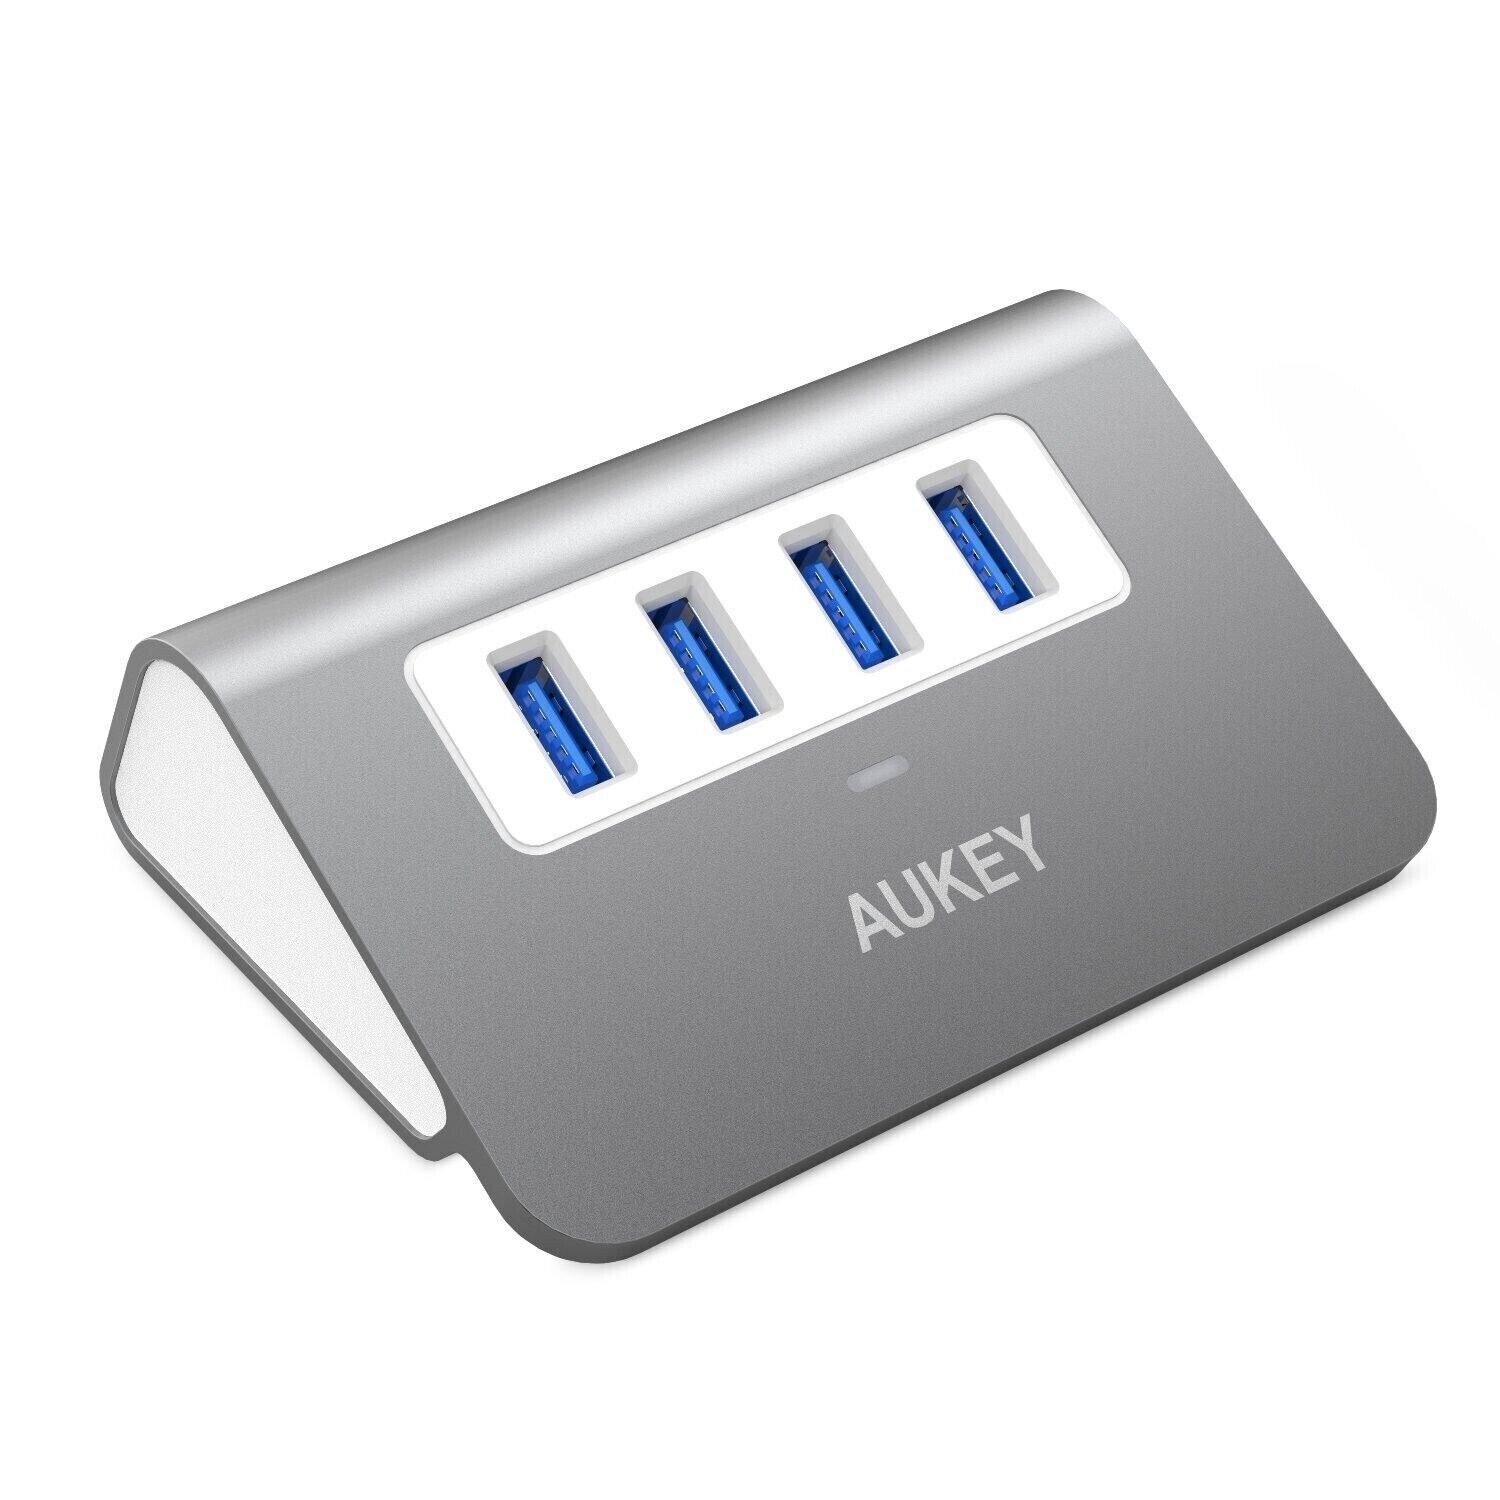 AUKEY USB Hub 3.0 Portable Aluminum 4 Port USB 3.0 Hub CB-H5